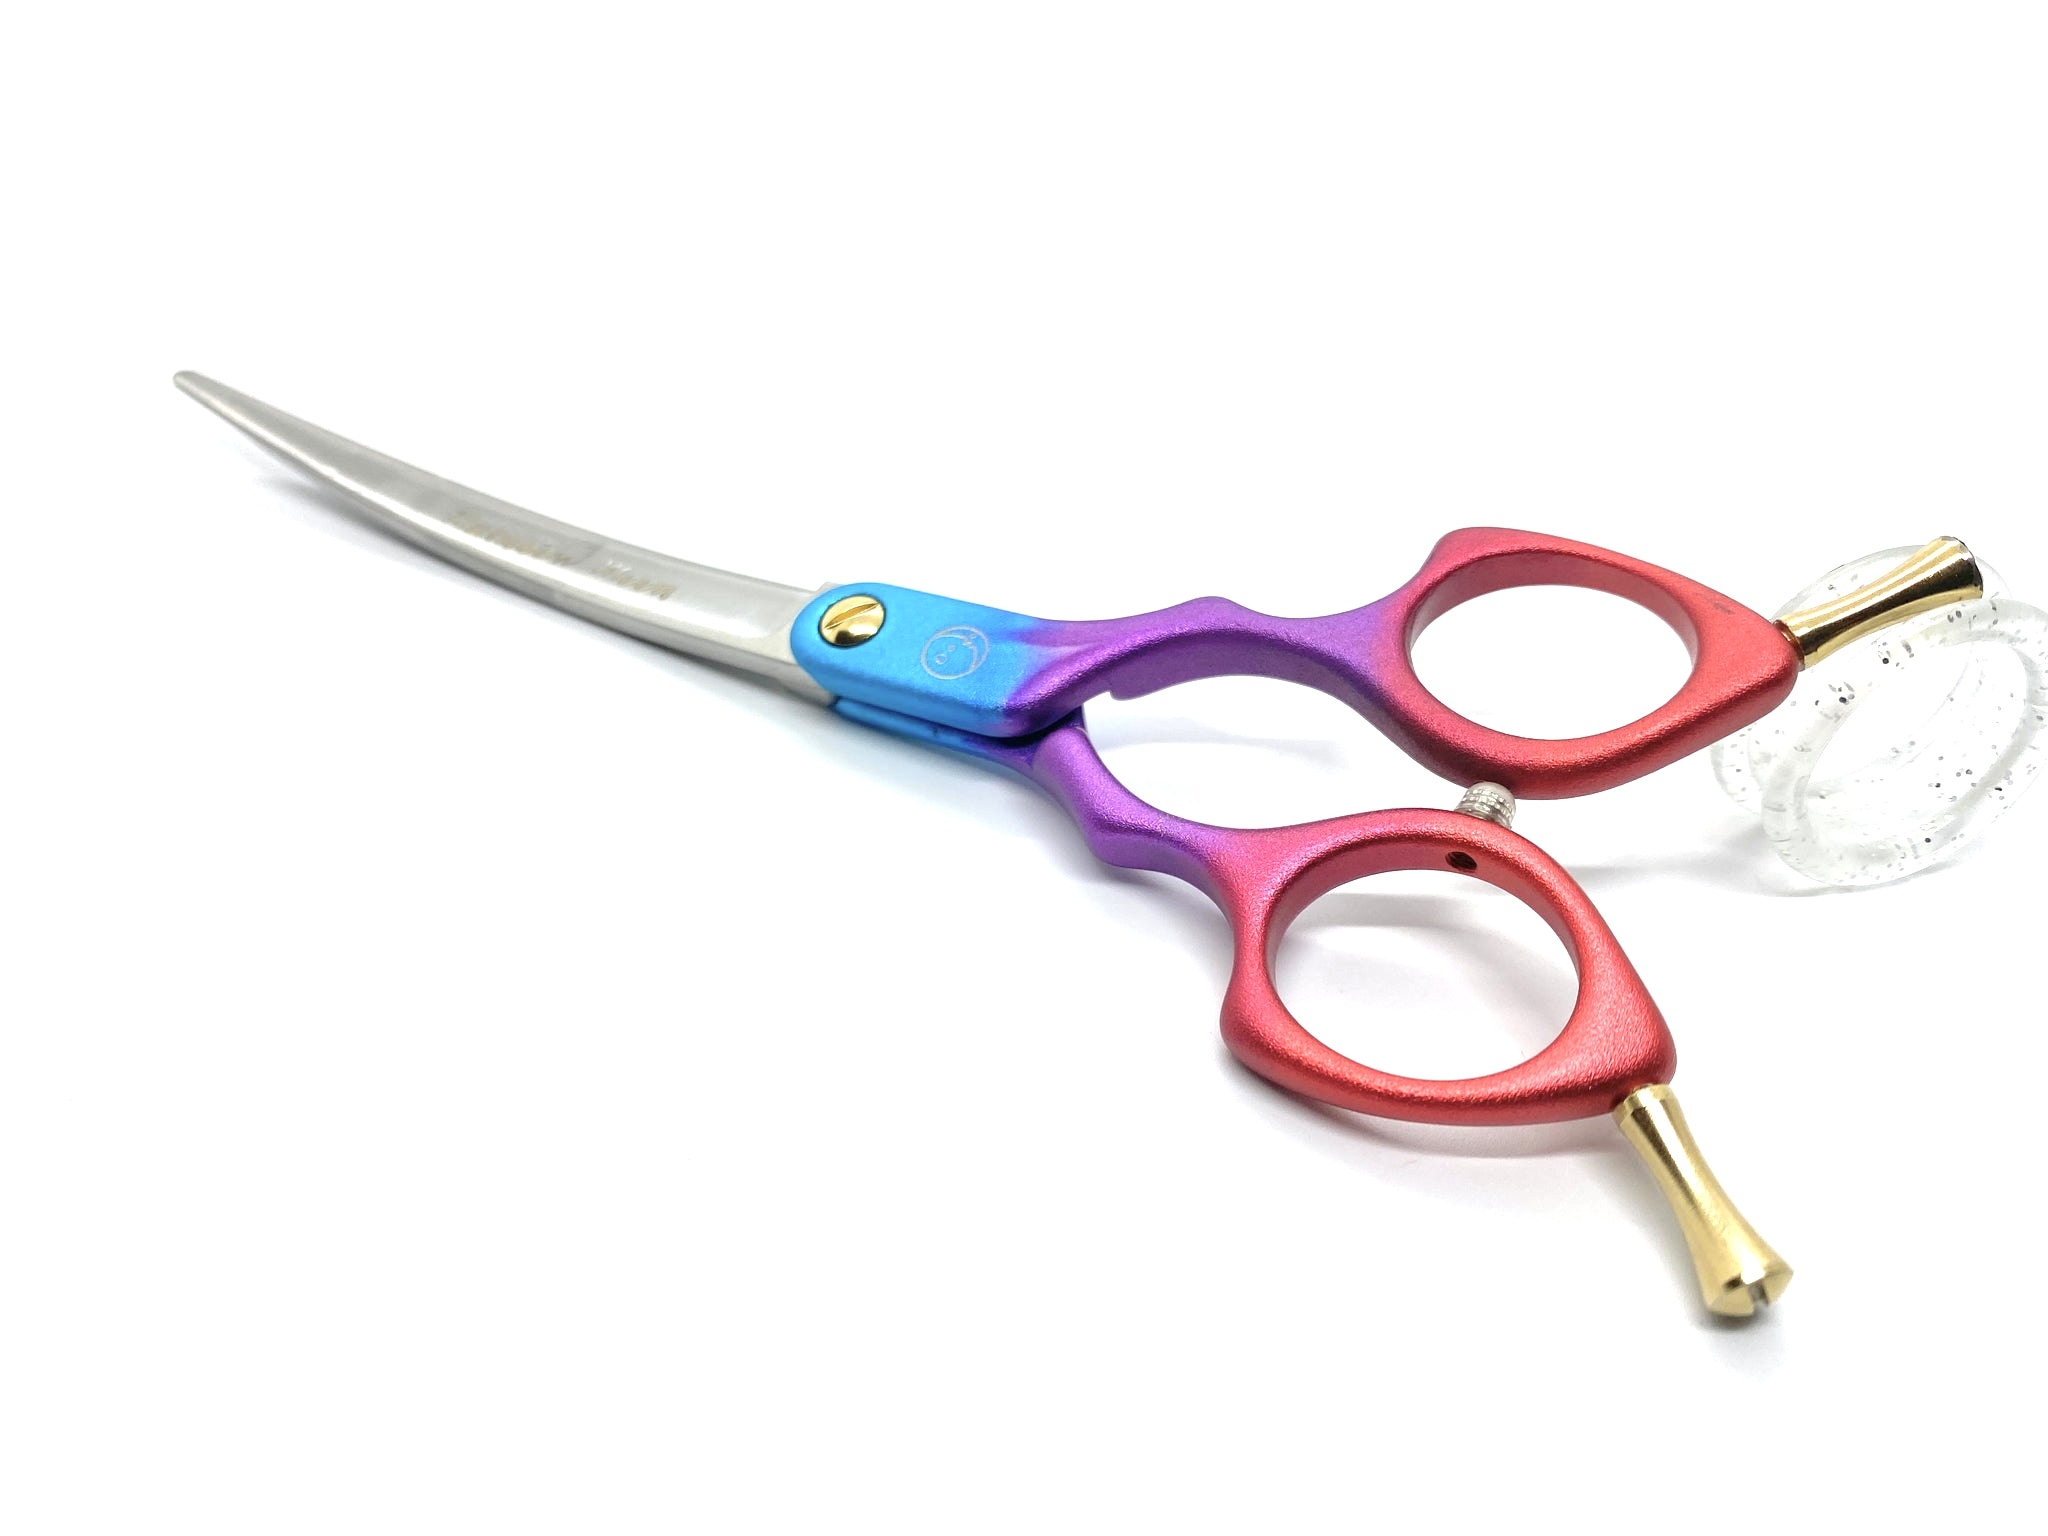 Yellotools YelloShear Orbit  Curved scissors for car wrapping